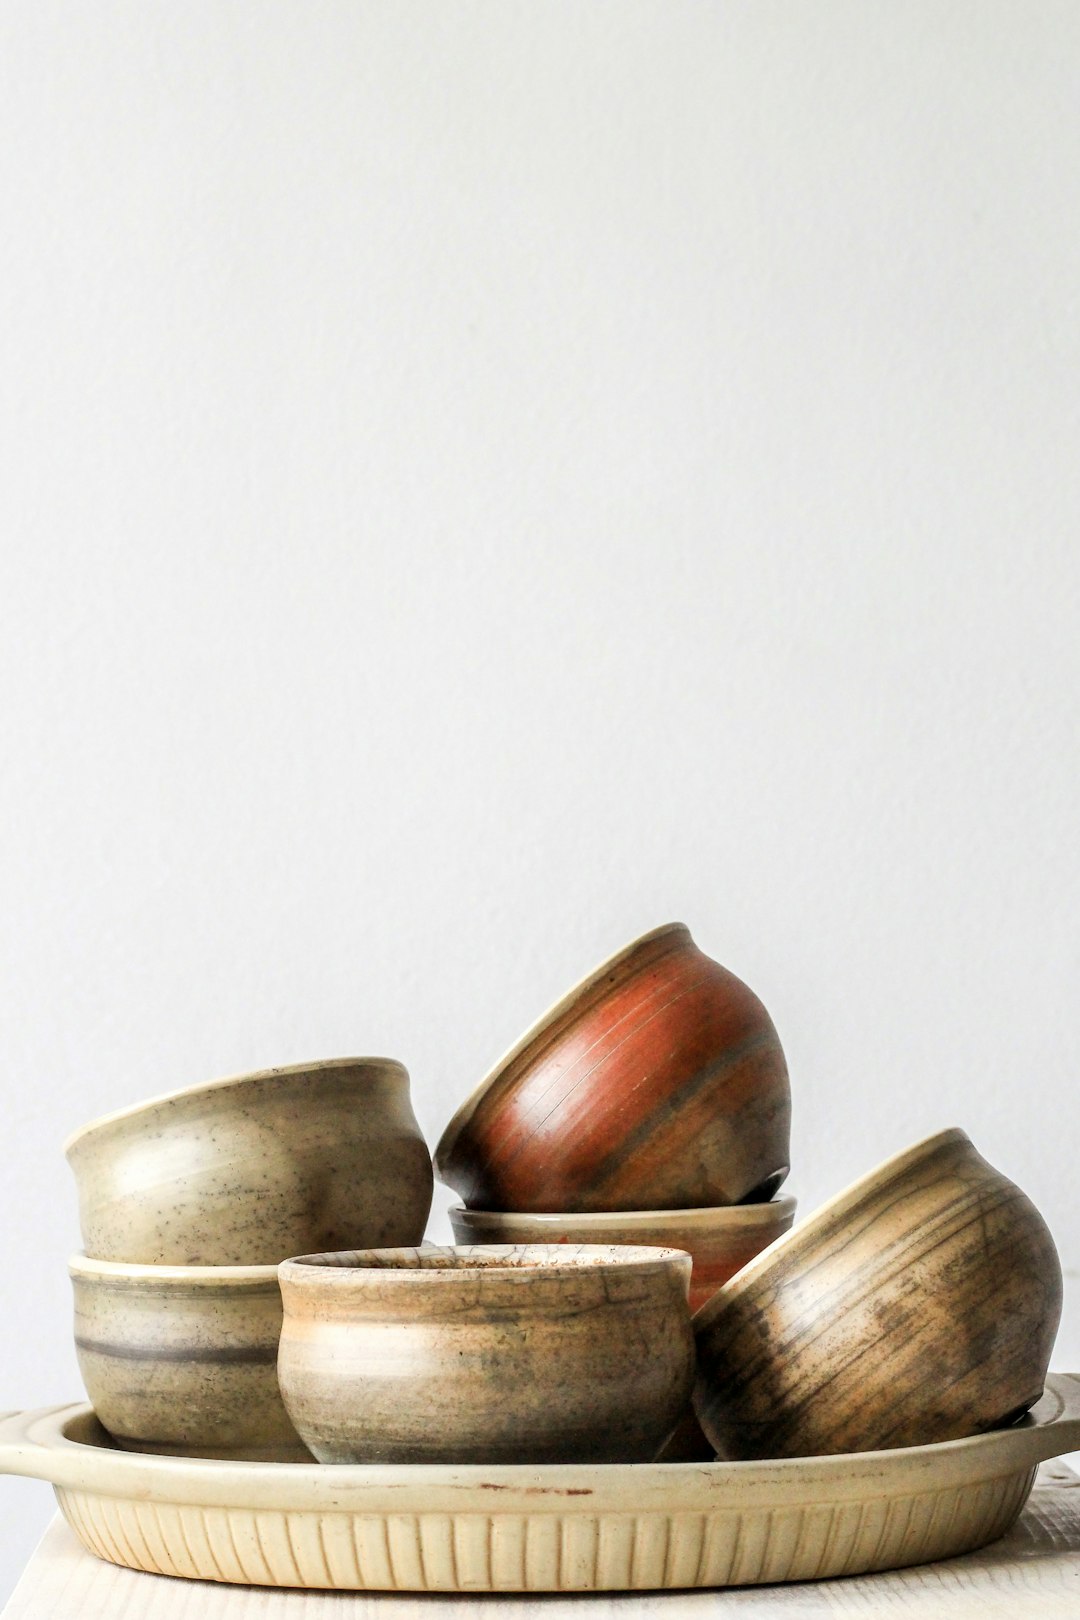 Handmade pottery dishes